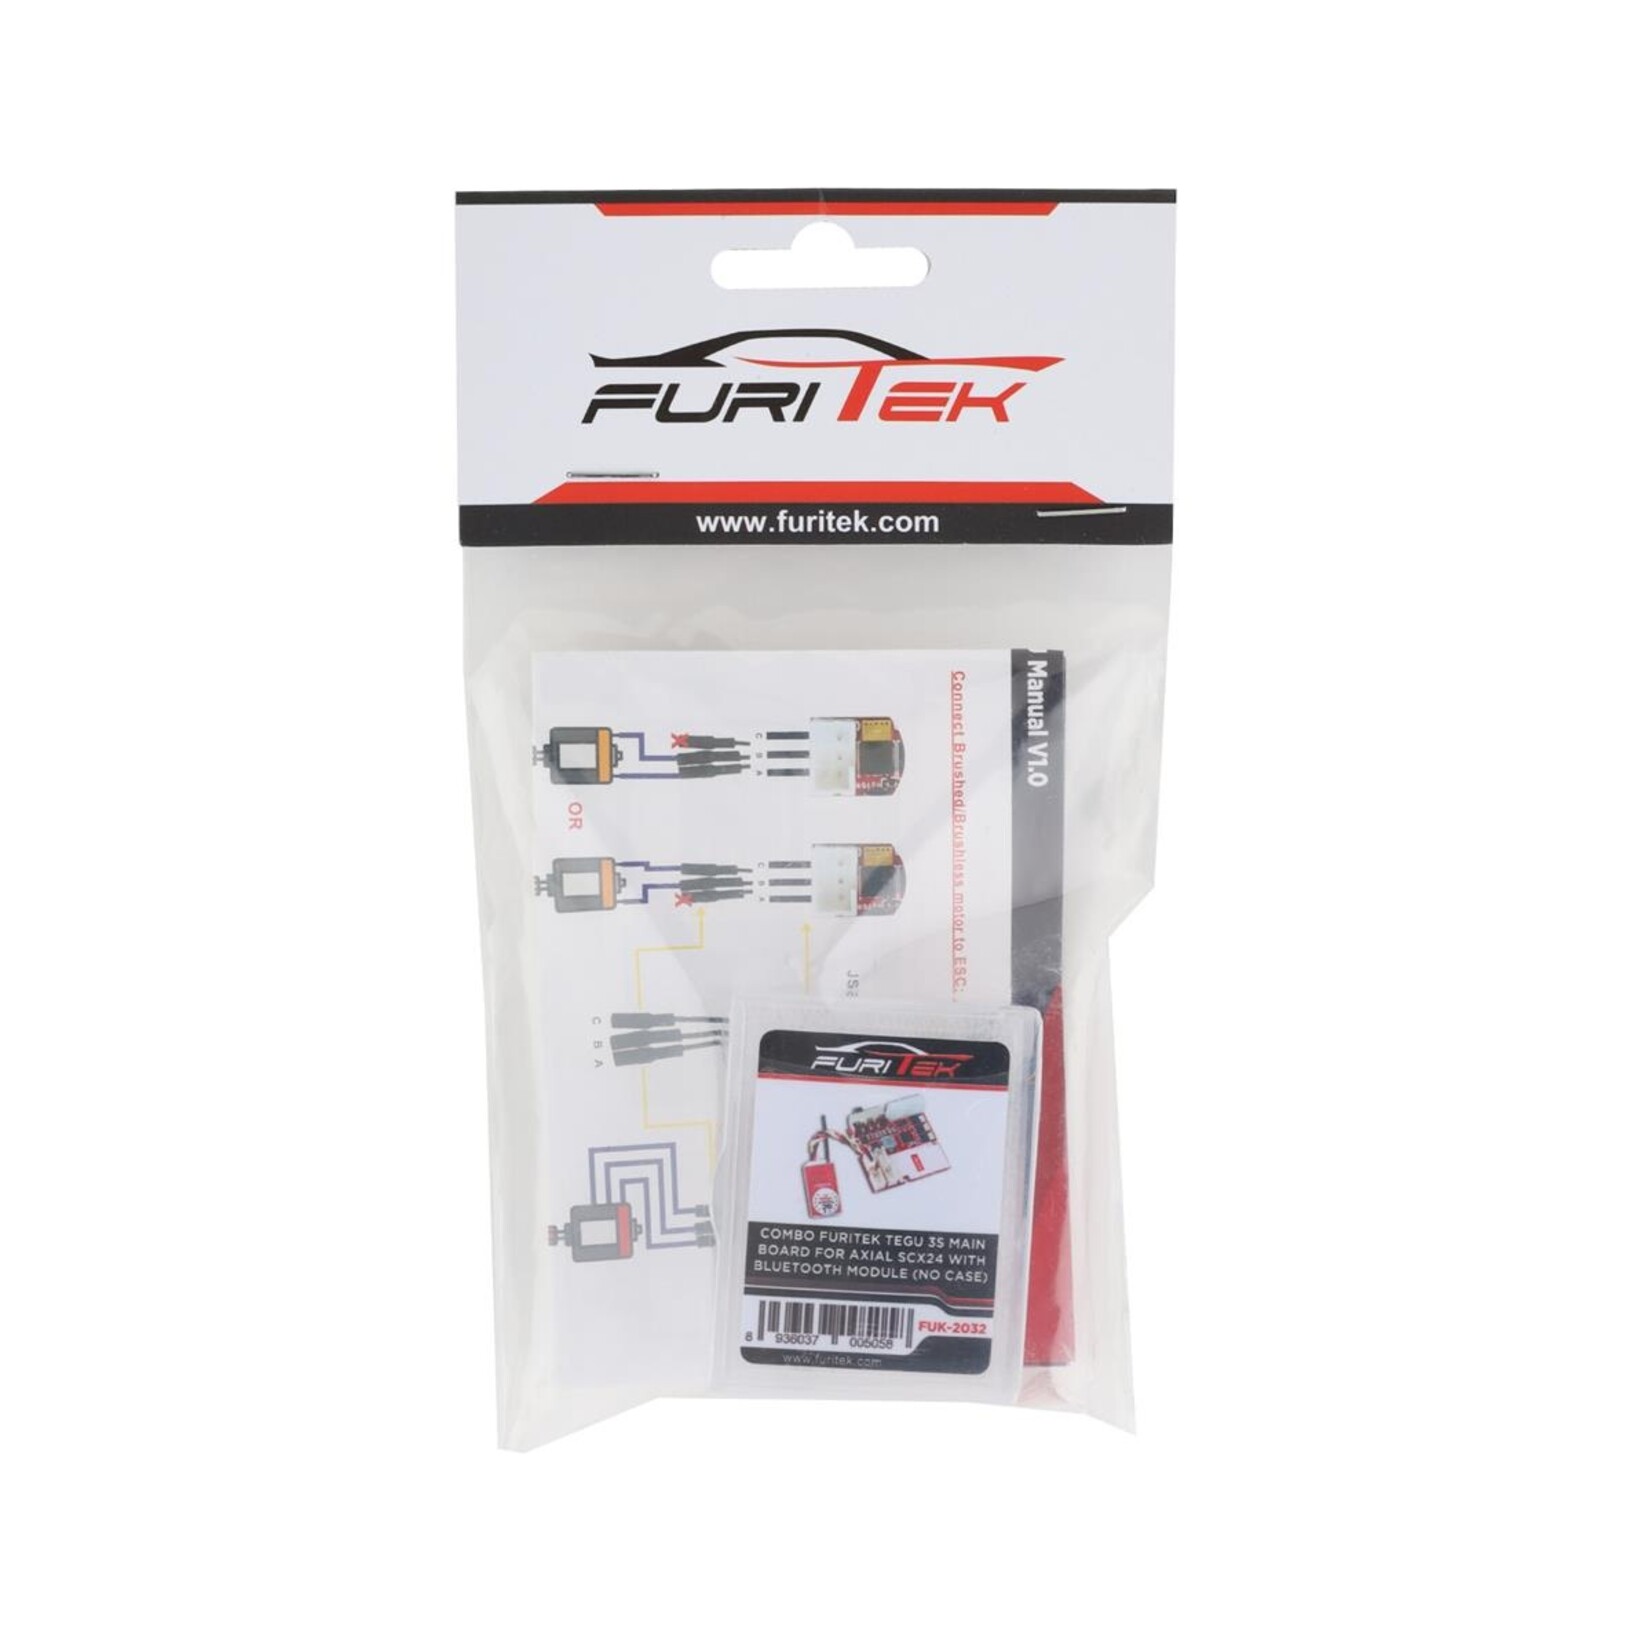 Furitek Furitek Tegu 20A Brushed/Brushless ESC Main Board Combo (No Case) w/Bluetooth Module #FUK-2032